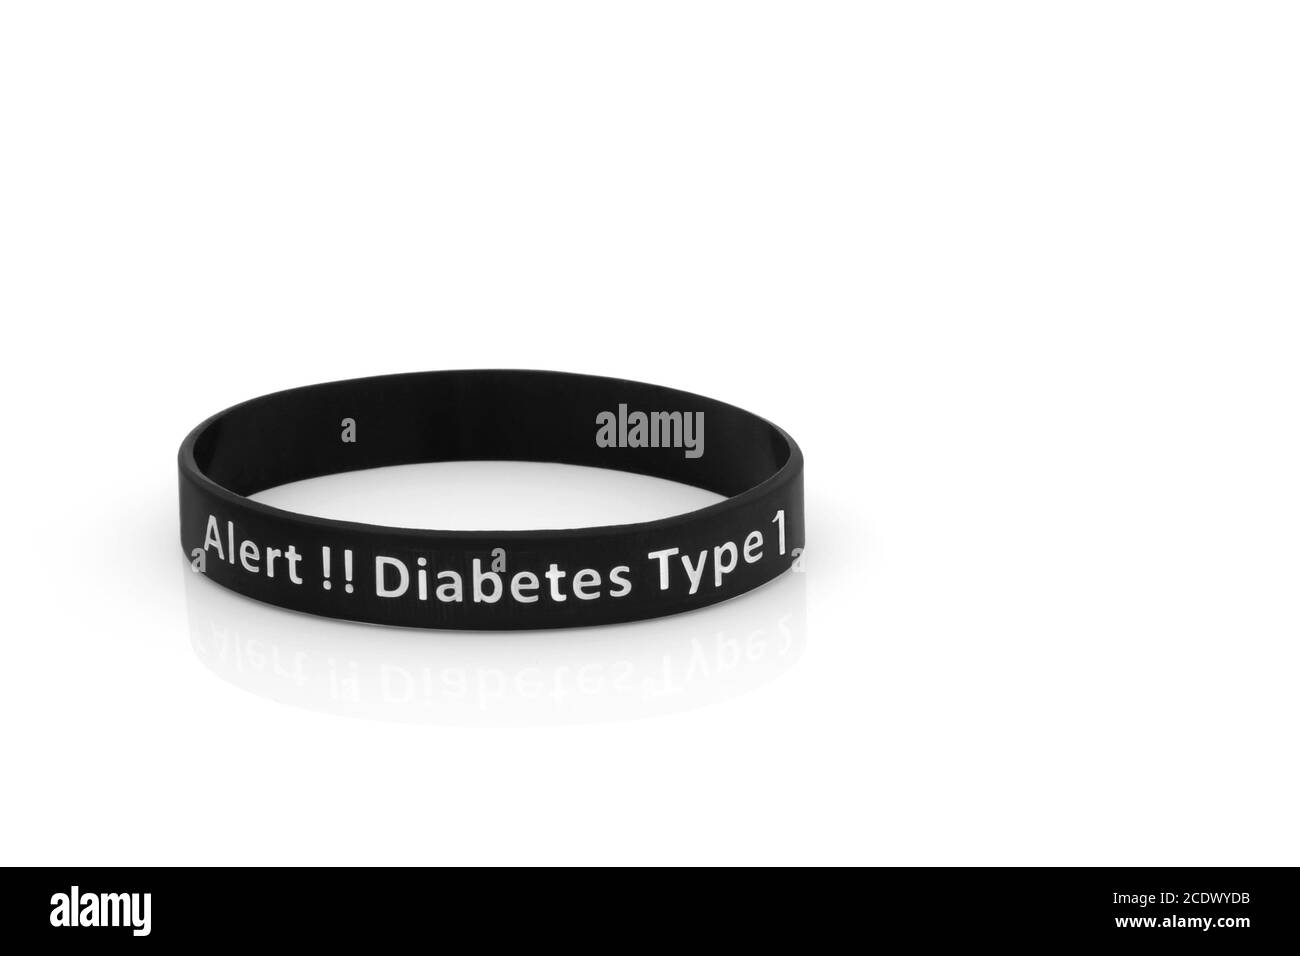 Diabetes type one alert wristband in black rubber silicone on white background. Stock Photo